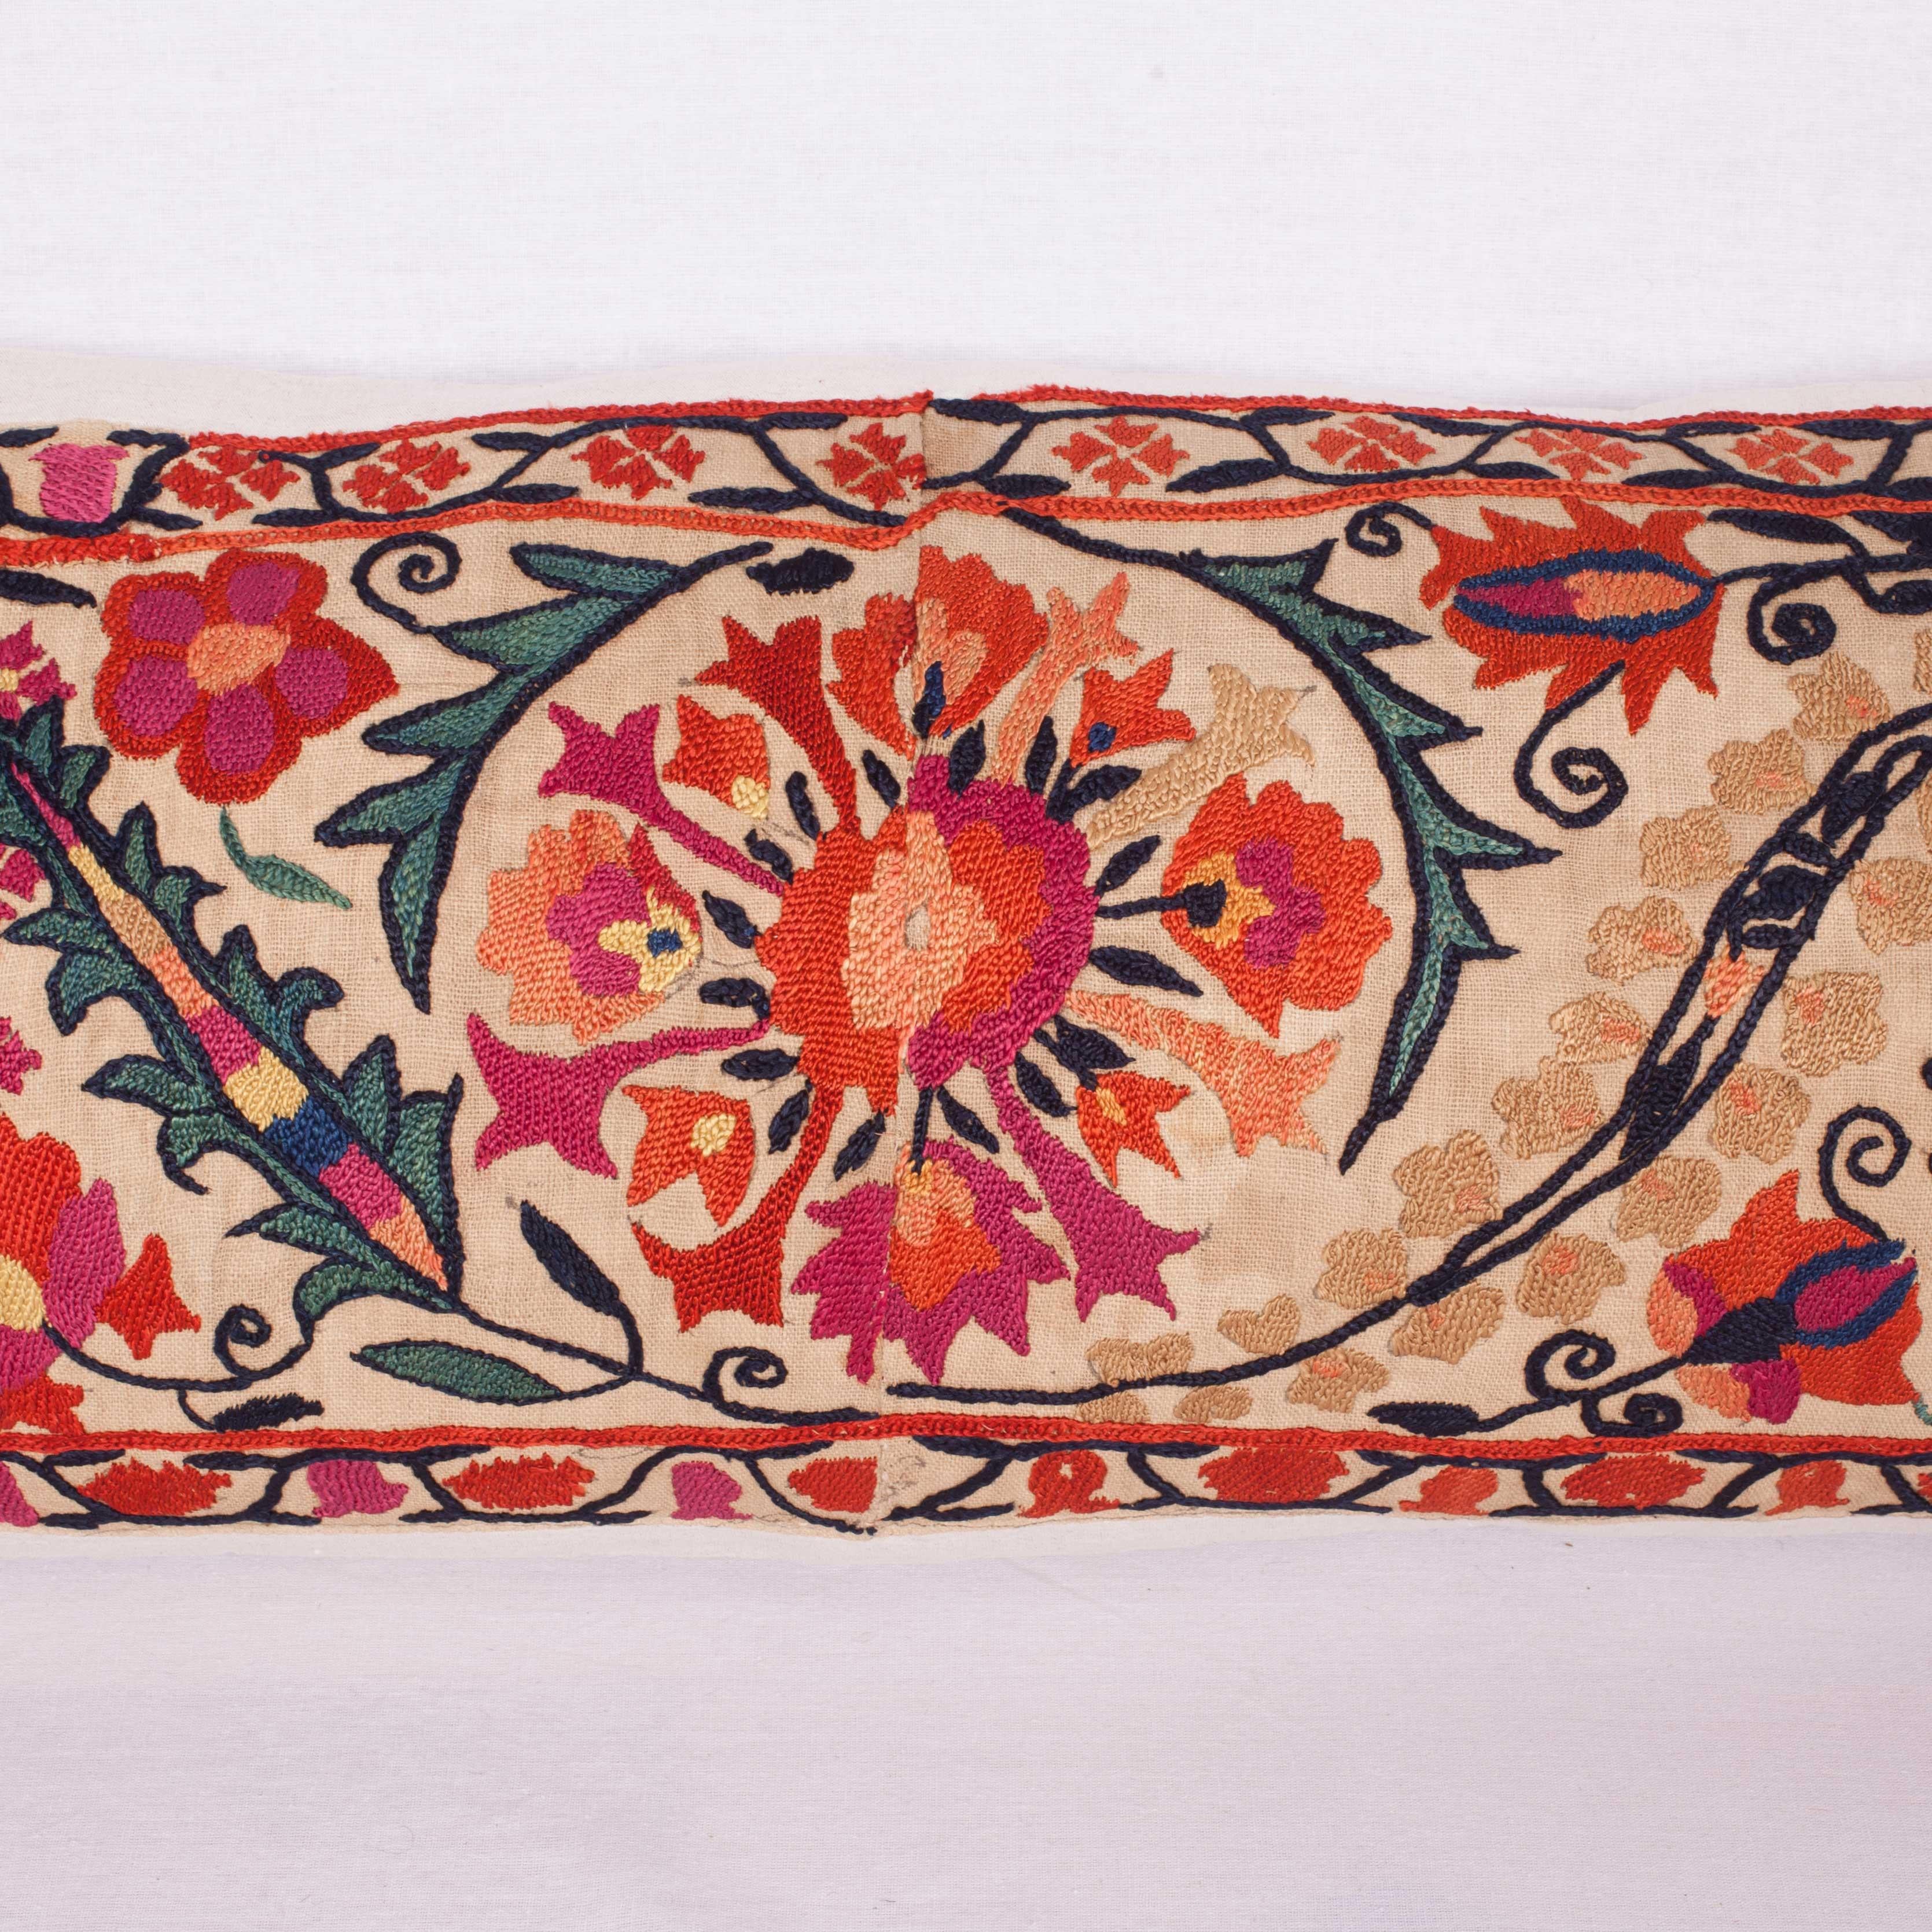 Uzbek Antique Suzani Pillow Fashioned from a 19th Century Nurata Suzani